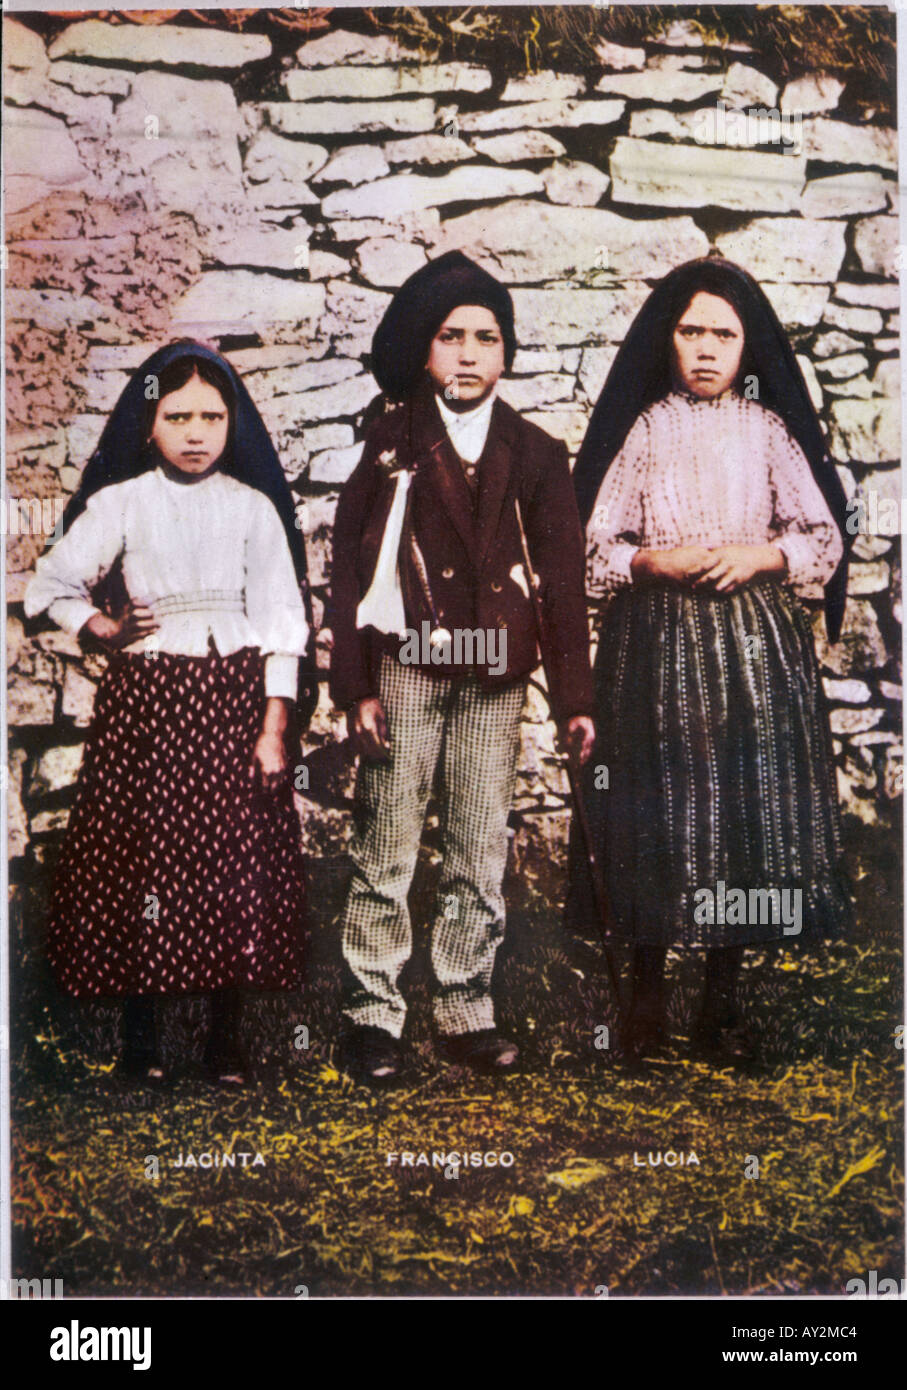 3 Fatima Visionaries Stock Photo